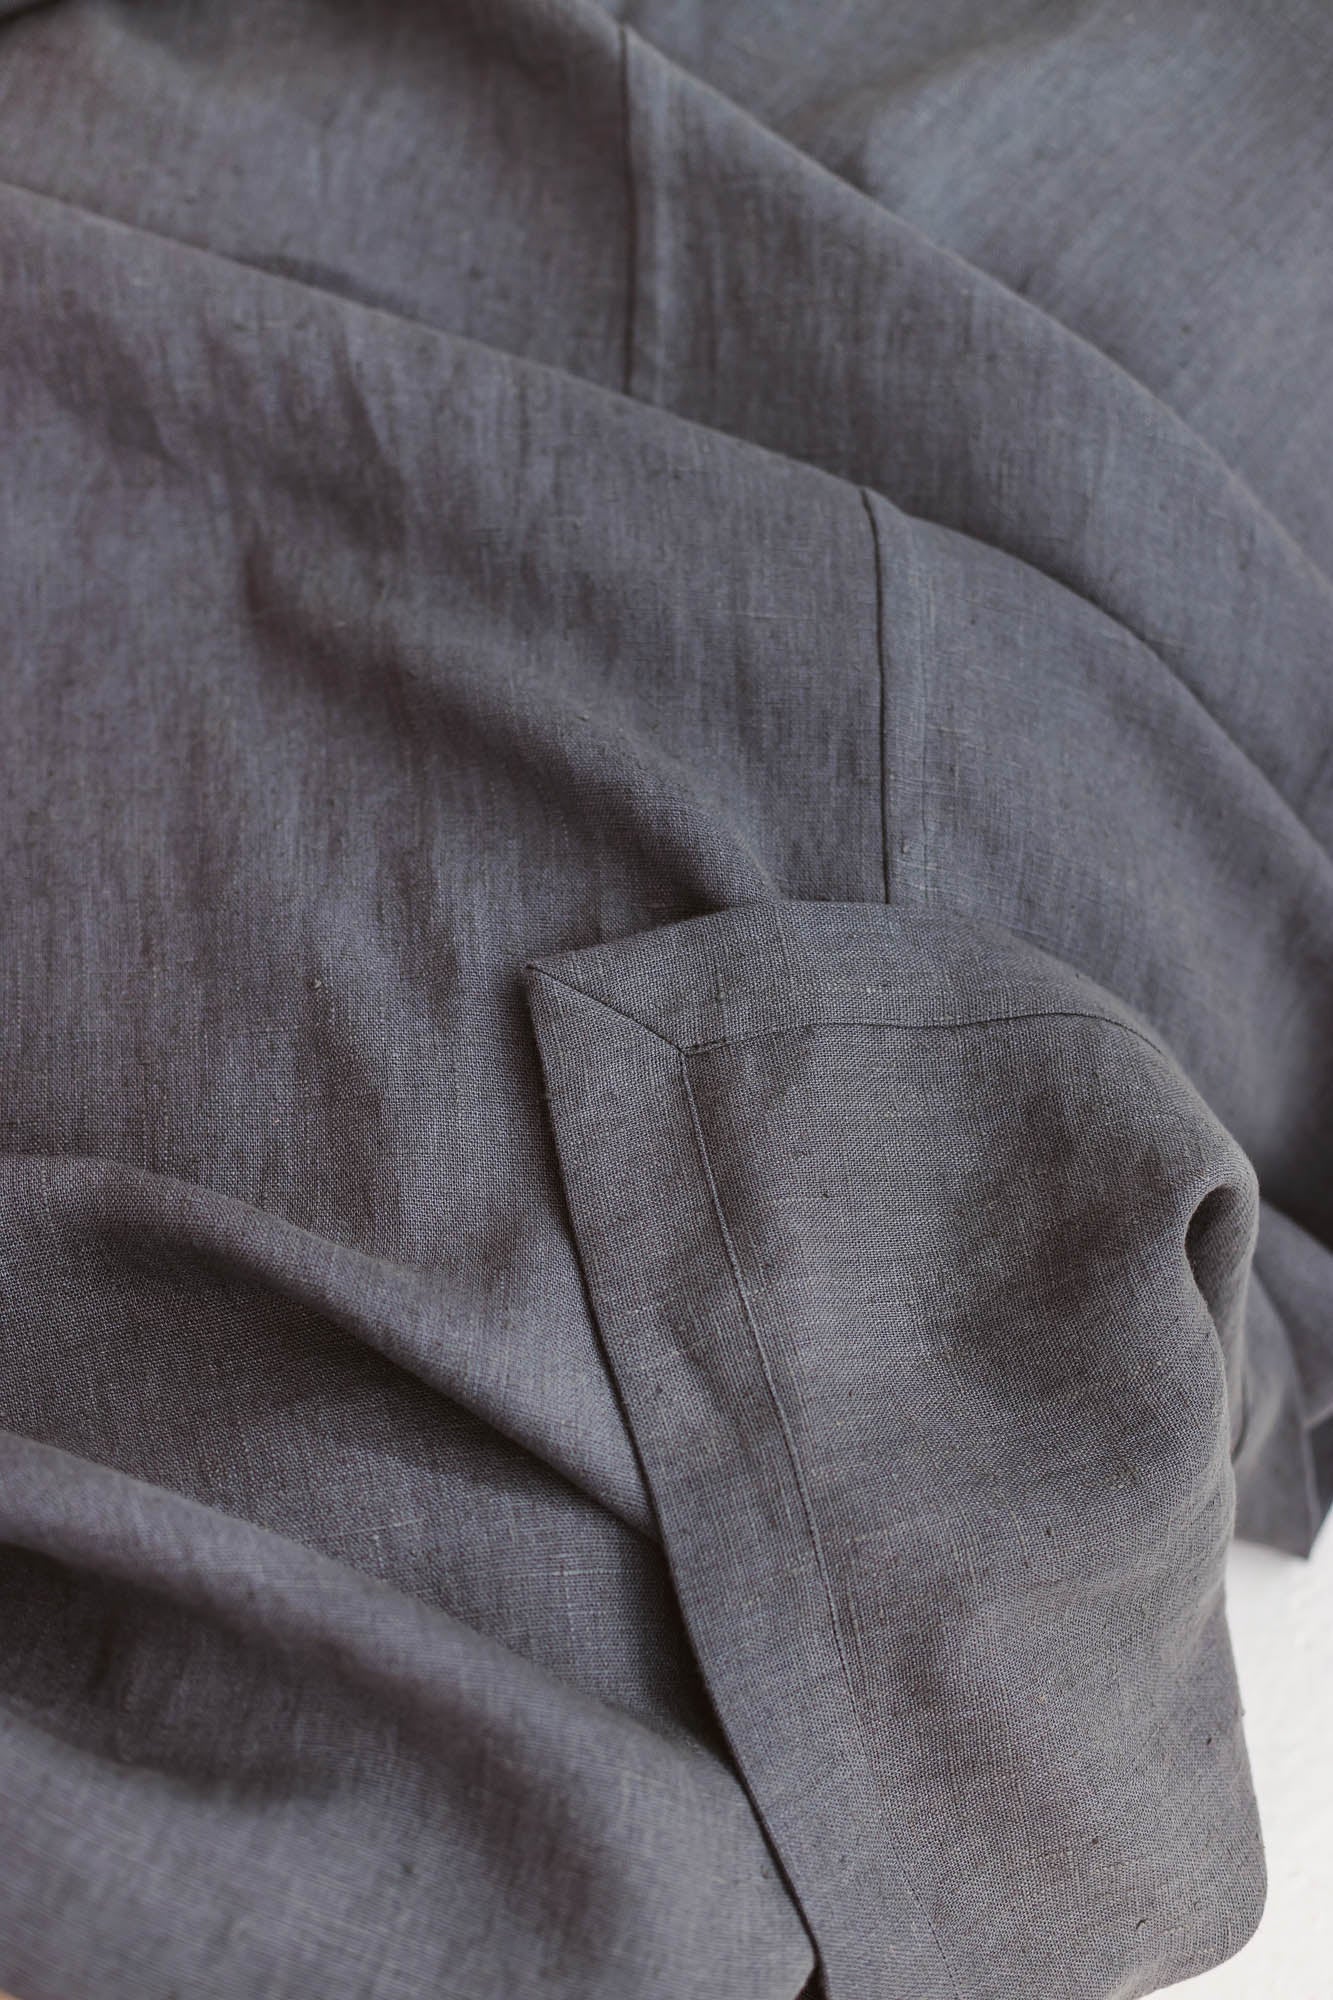 Charcoal gray linen bedspread